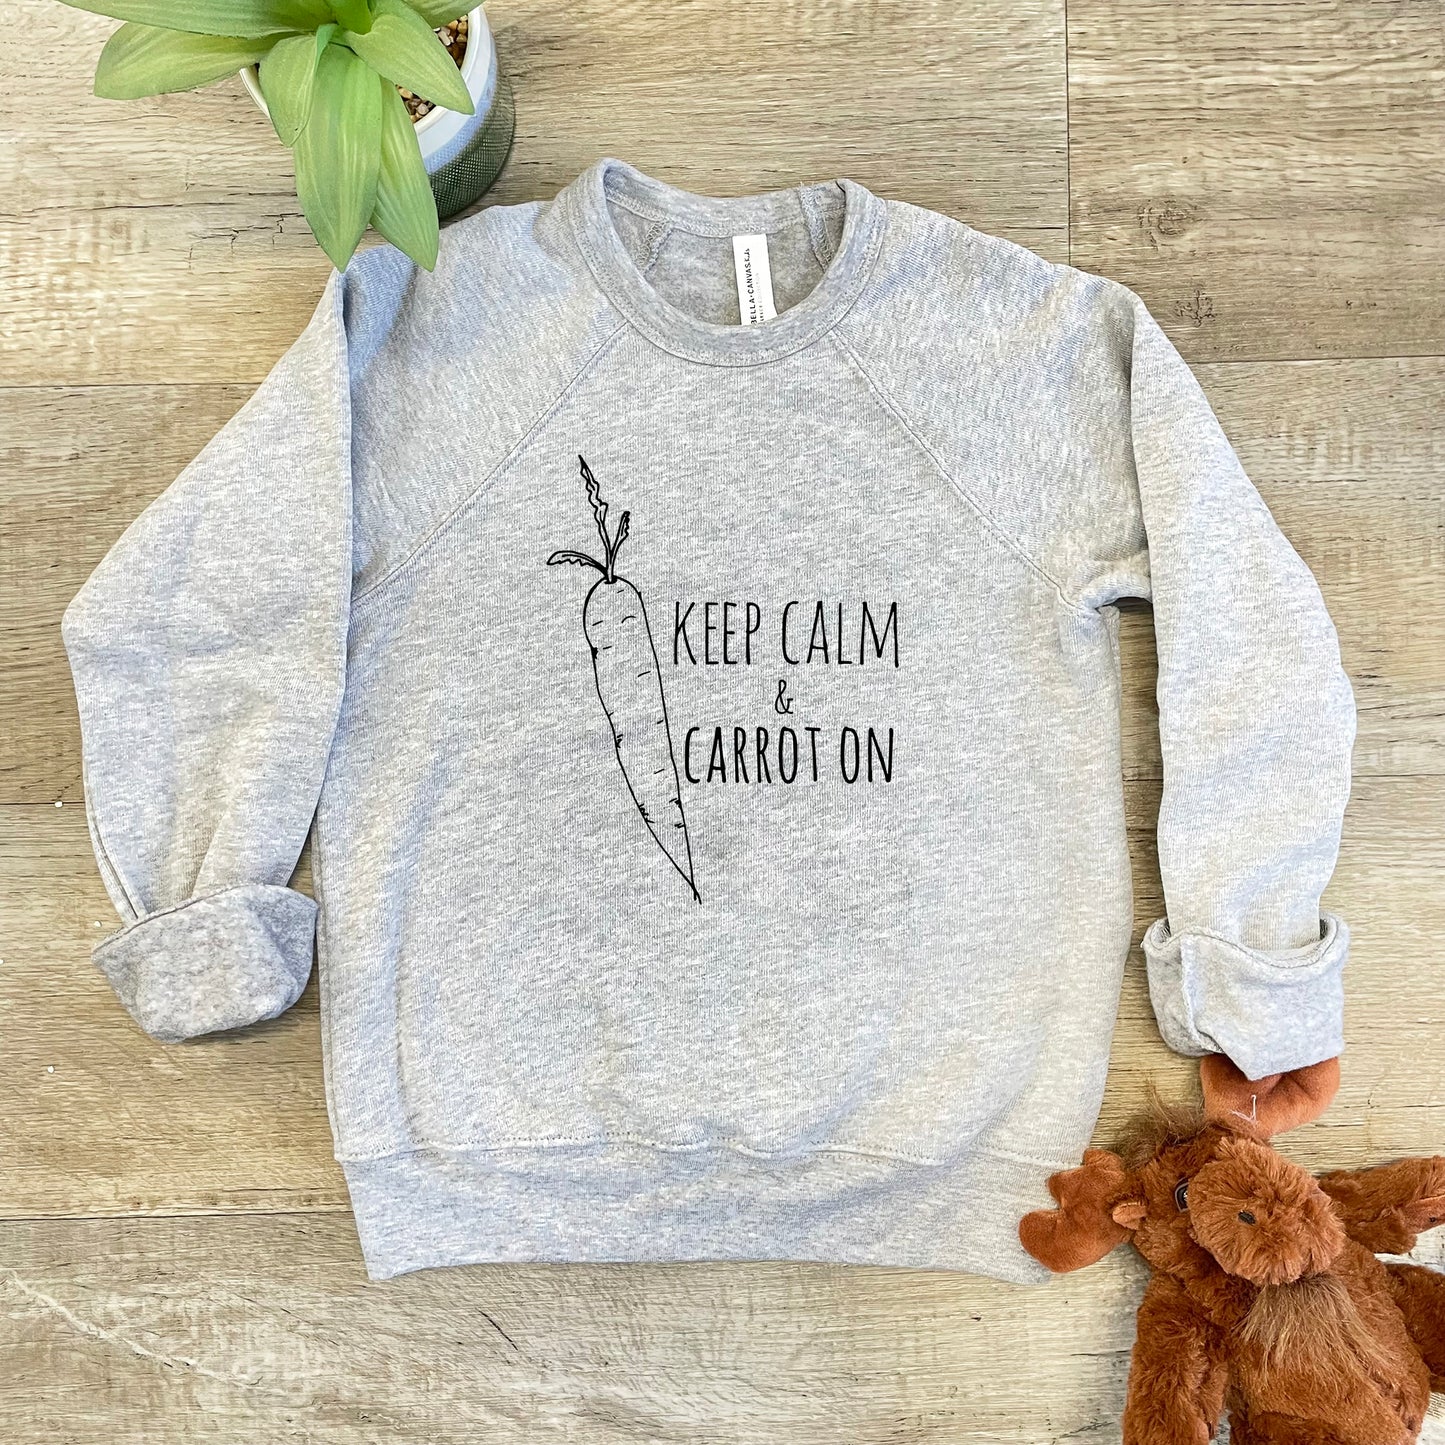 Keep Calm and Carrot On - Kid's Sweatshirt - Heather Gray or Mauve